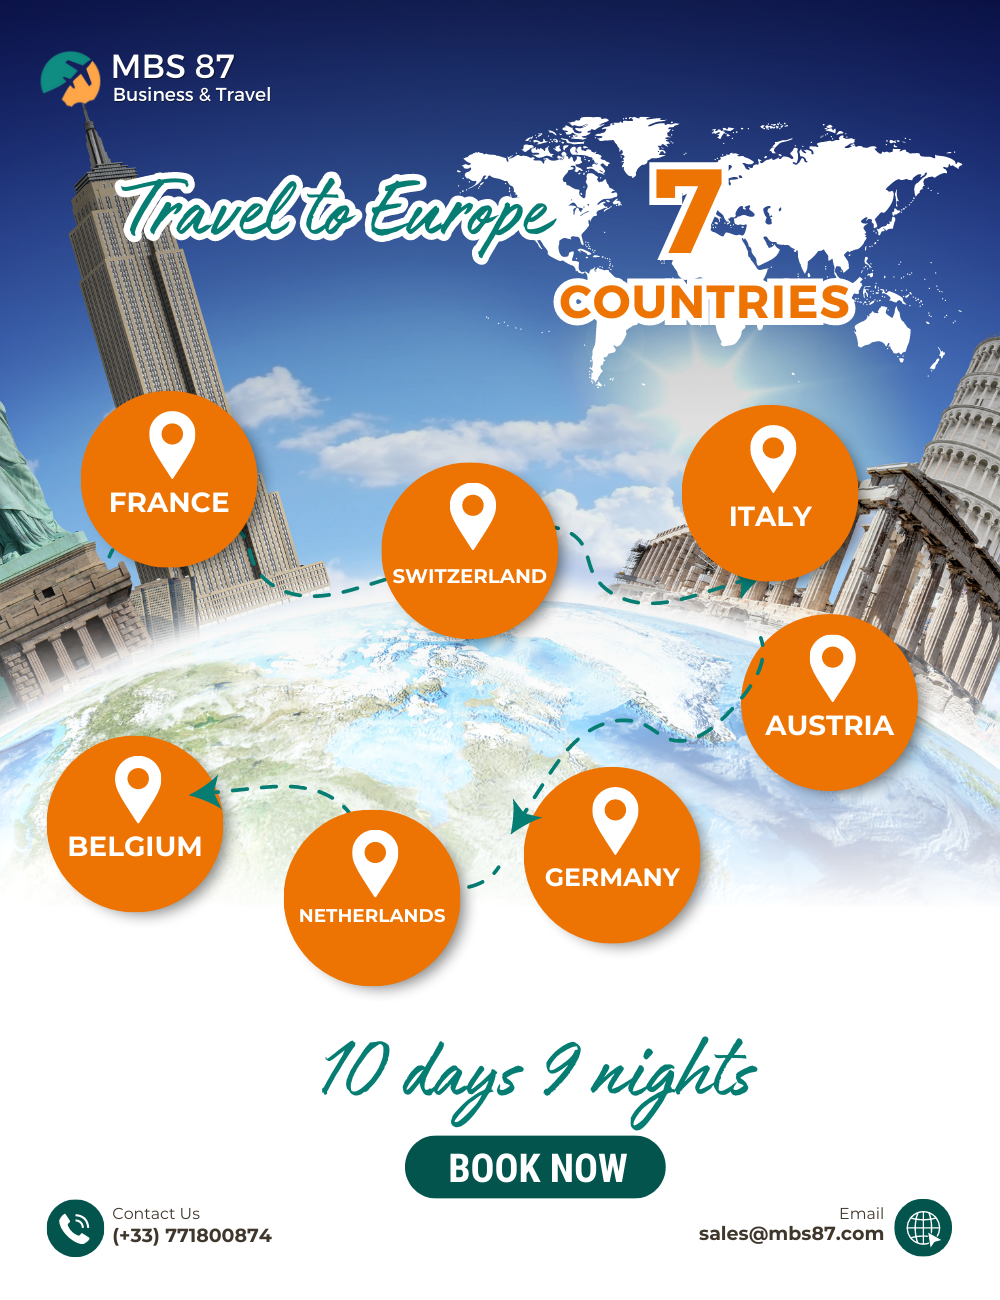 Europe Tour: 7 Countries | 10 days 9 nights